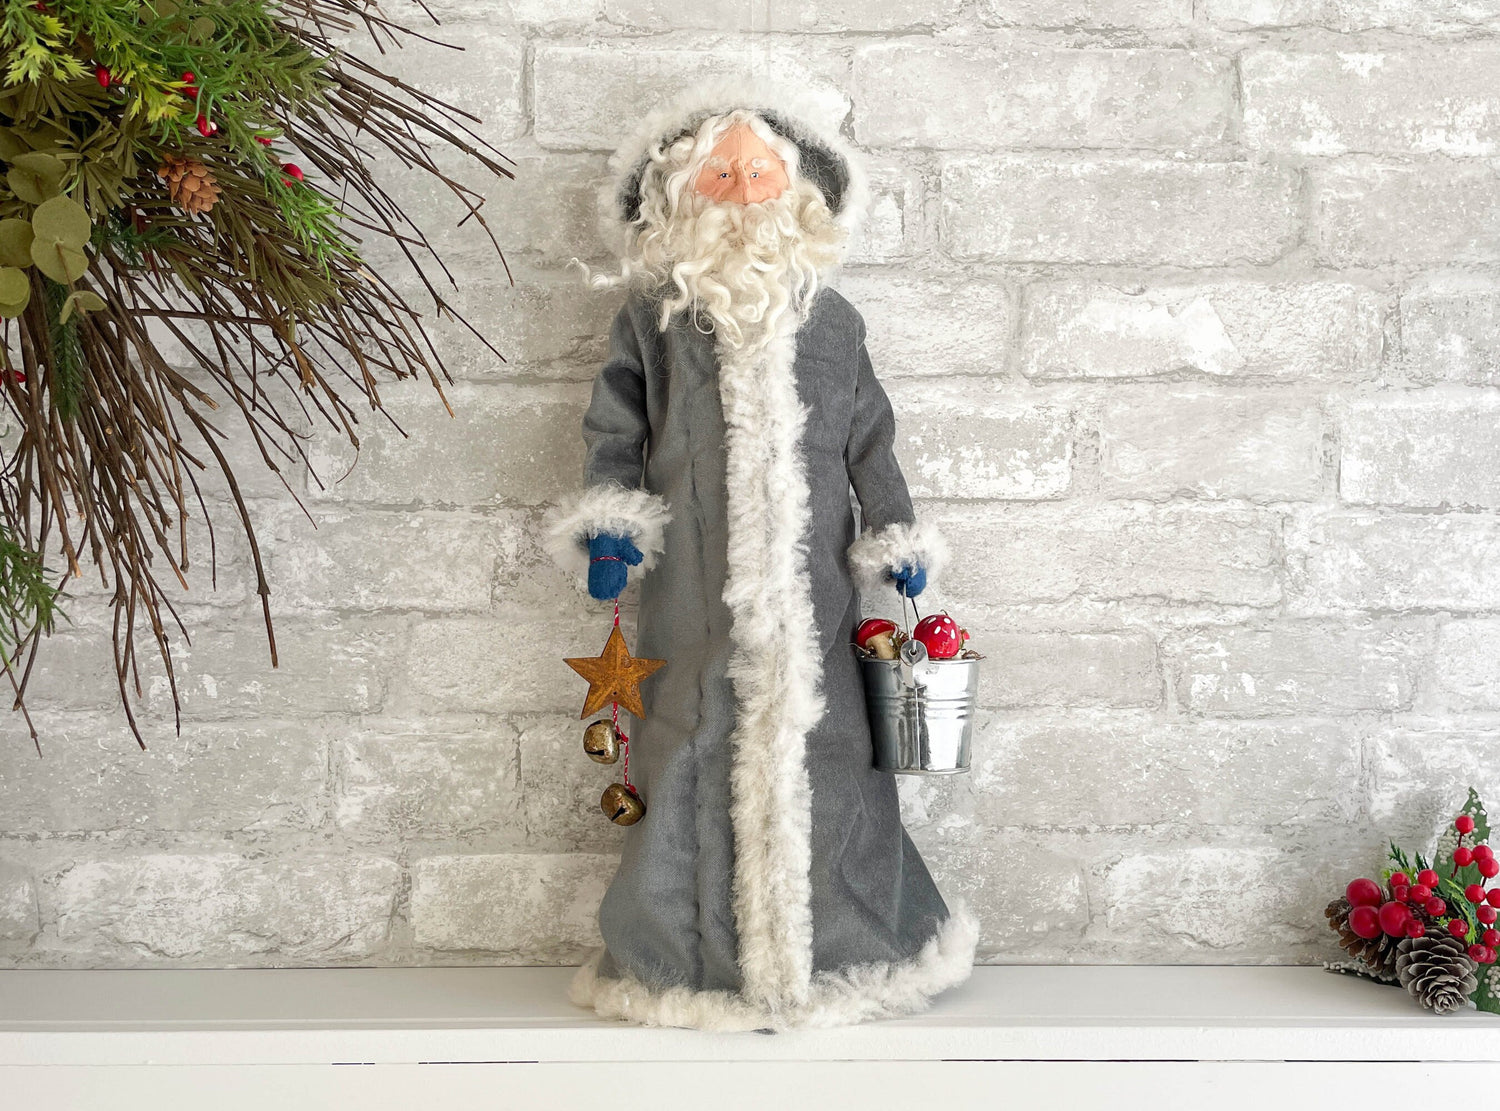 Handmade Santa Doll / One of a Kind Father Christmas Decor / Unique Heirloom Christmas Decoration